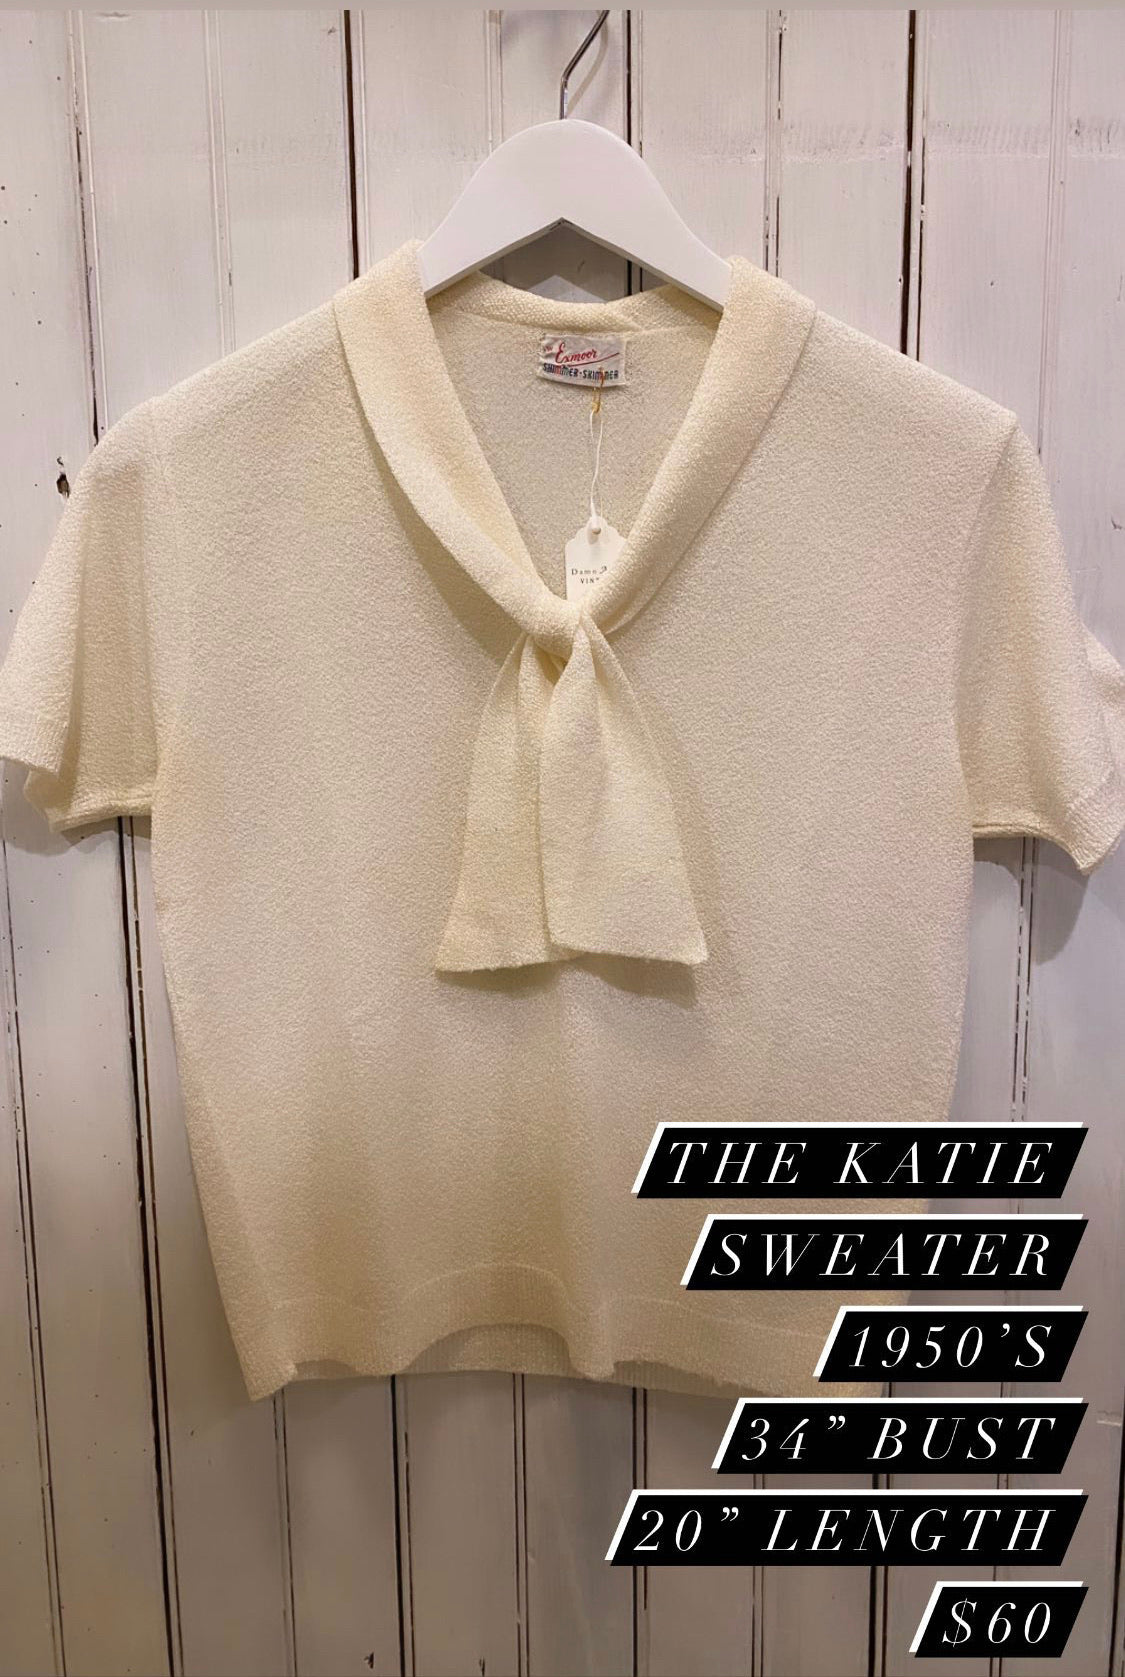 The Katie Sweater, 1950’s